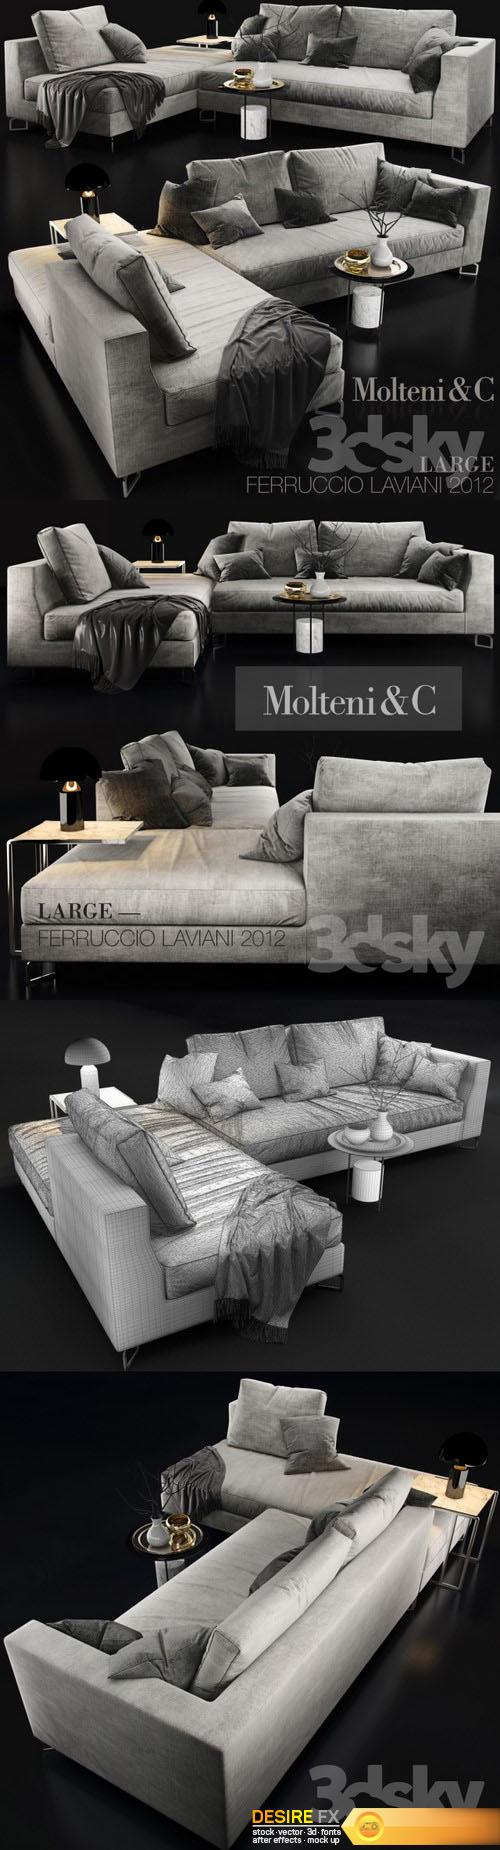 Sofa Molteni c LARGE 3d Model